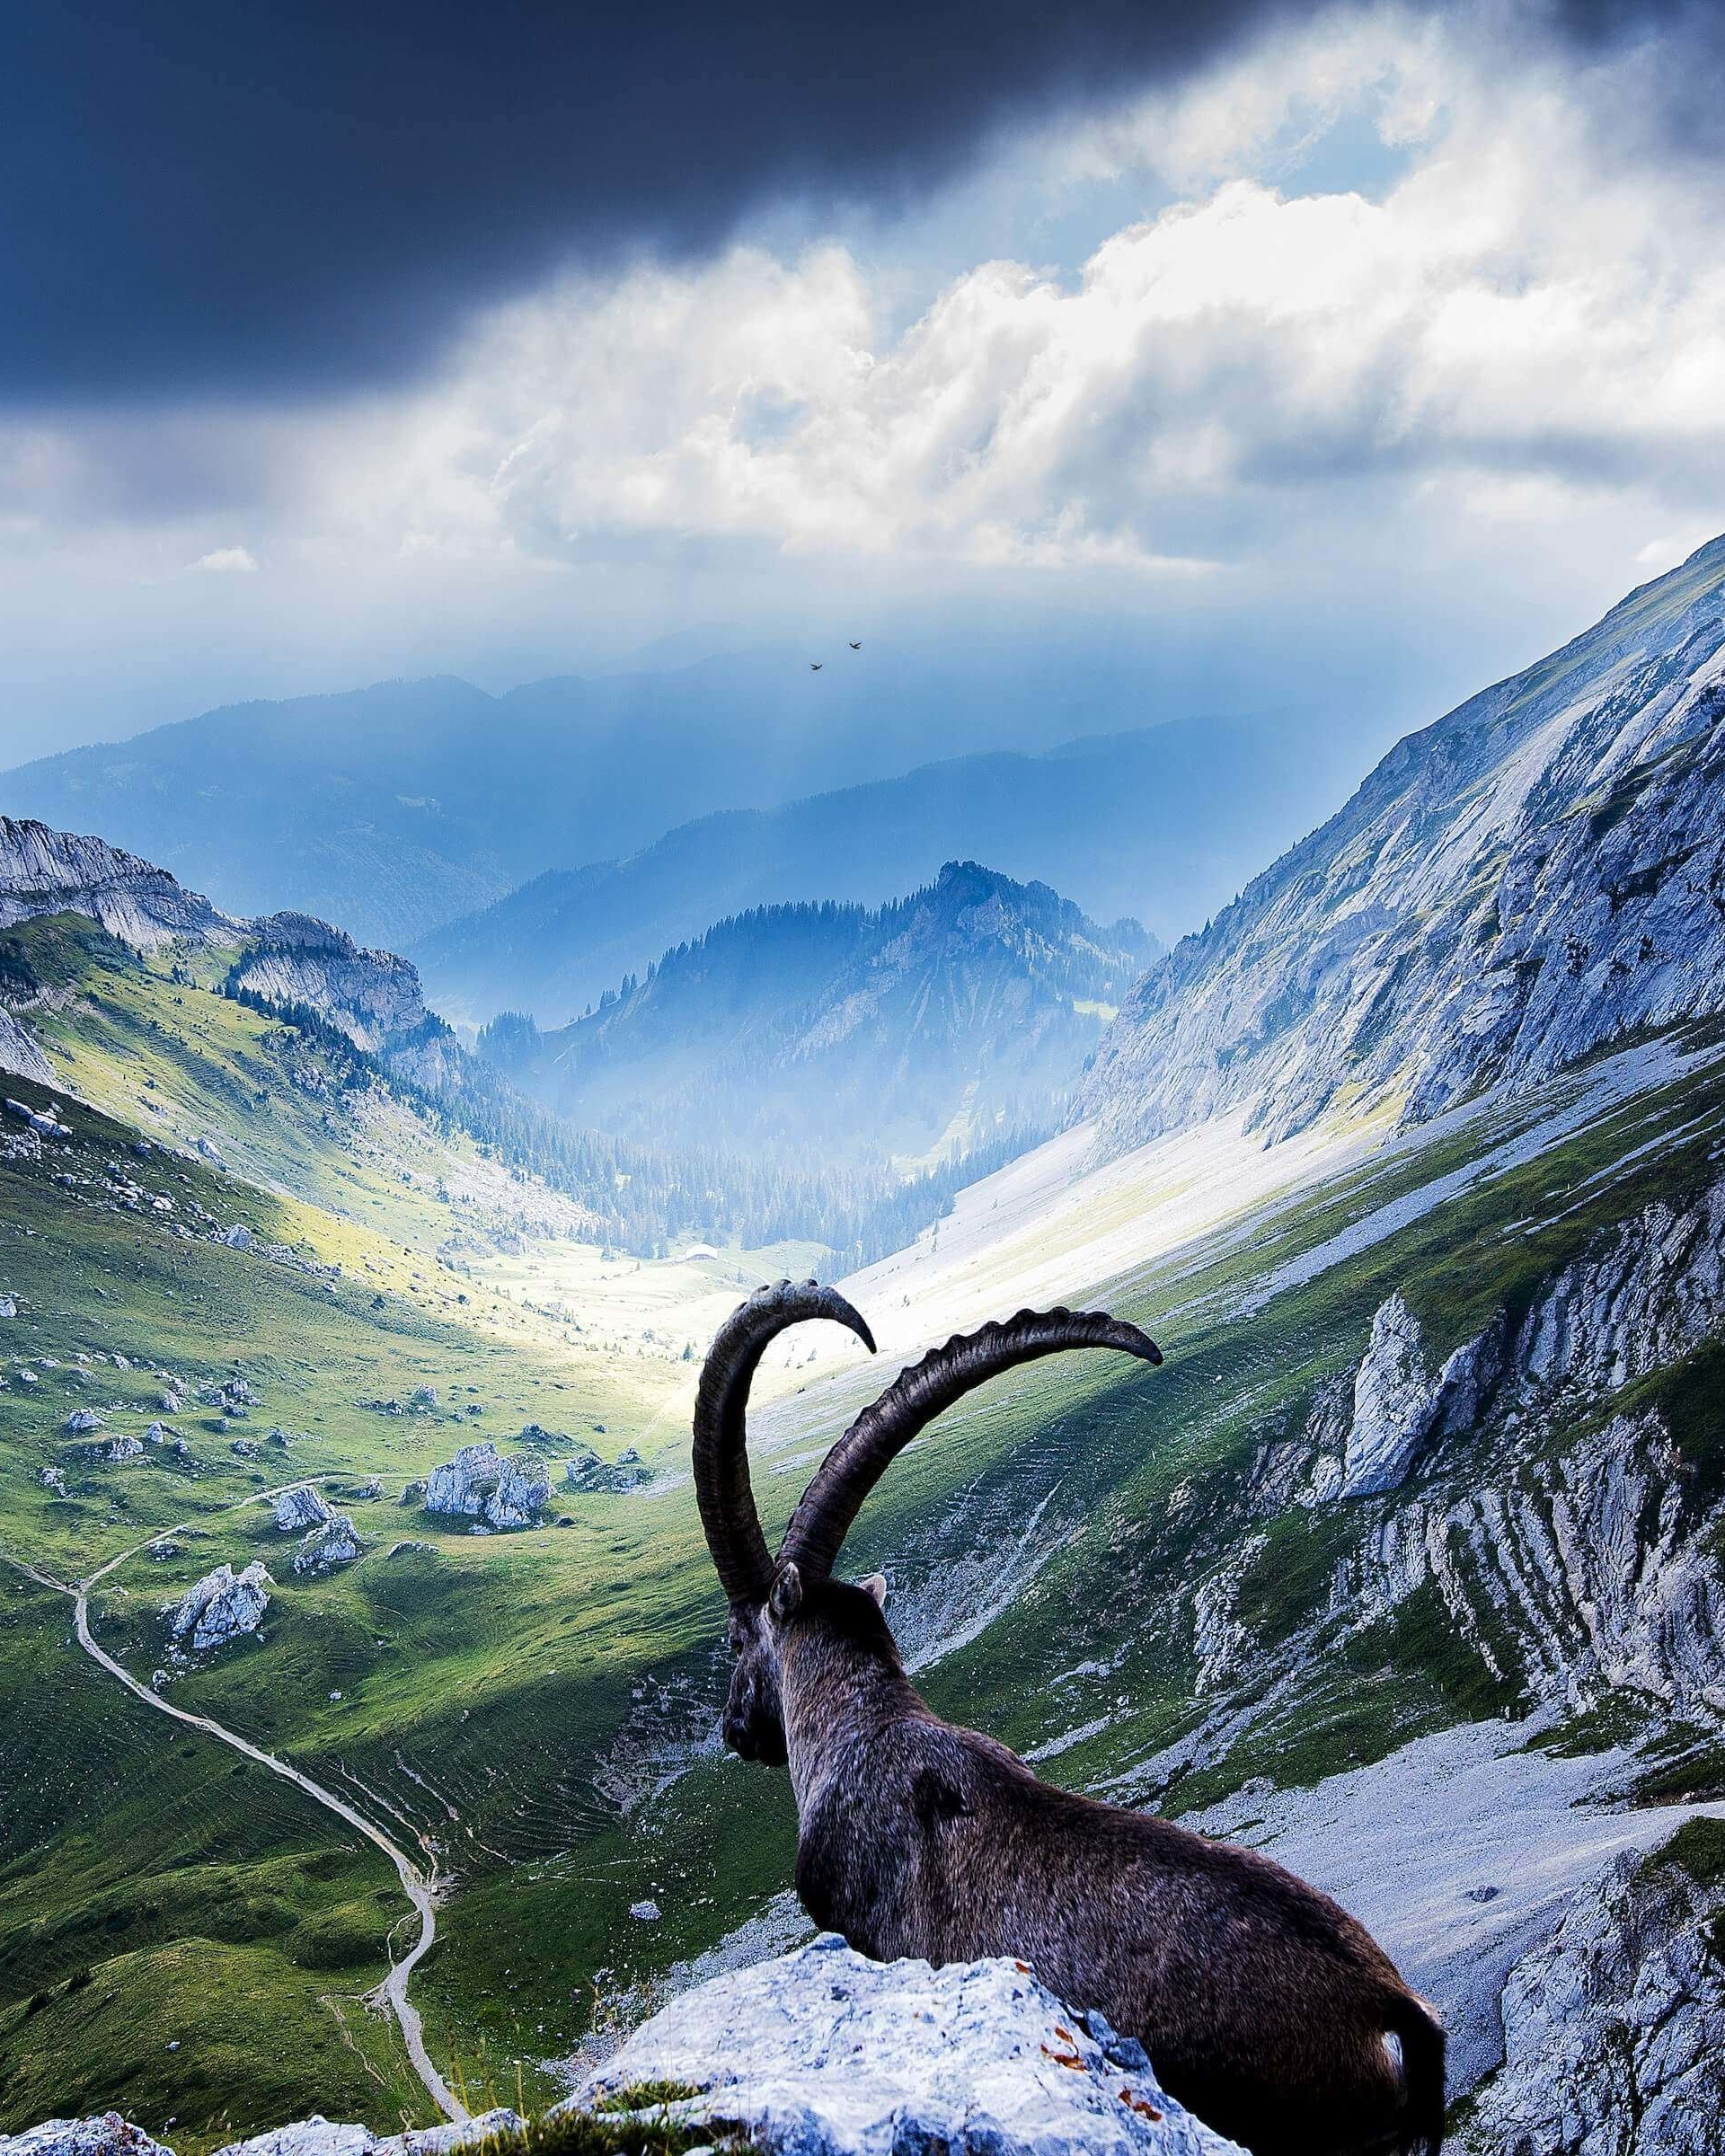 Goat at Pilatus, Switzerland Wallpaper for Google Nexus 7